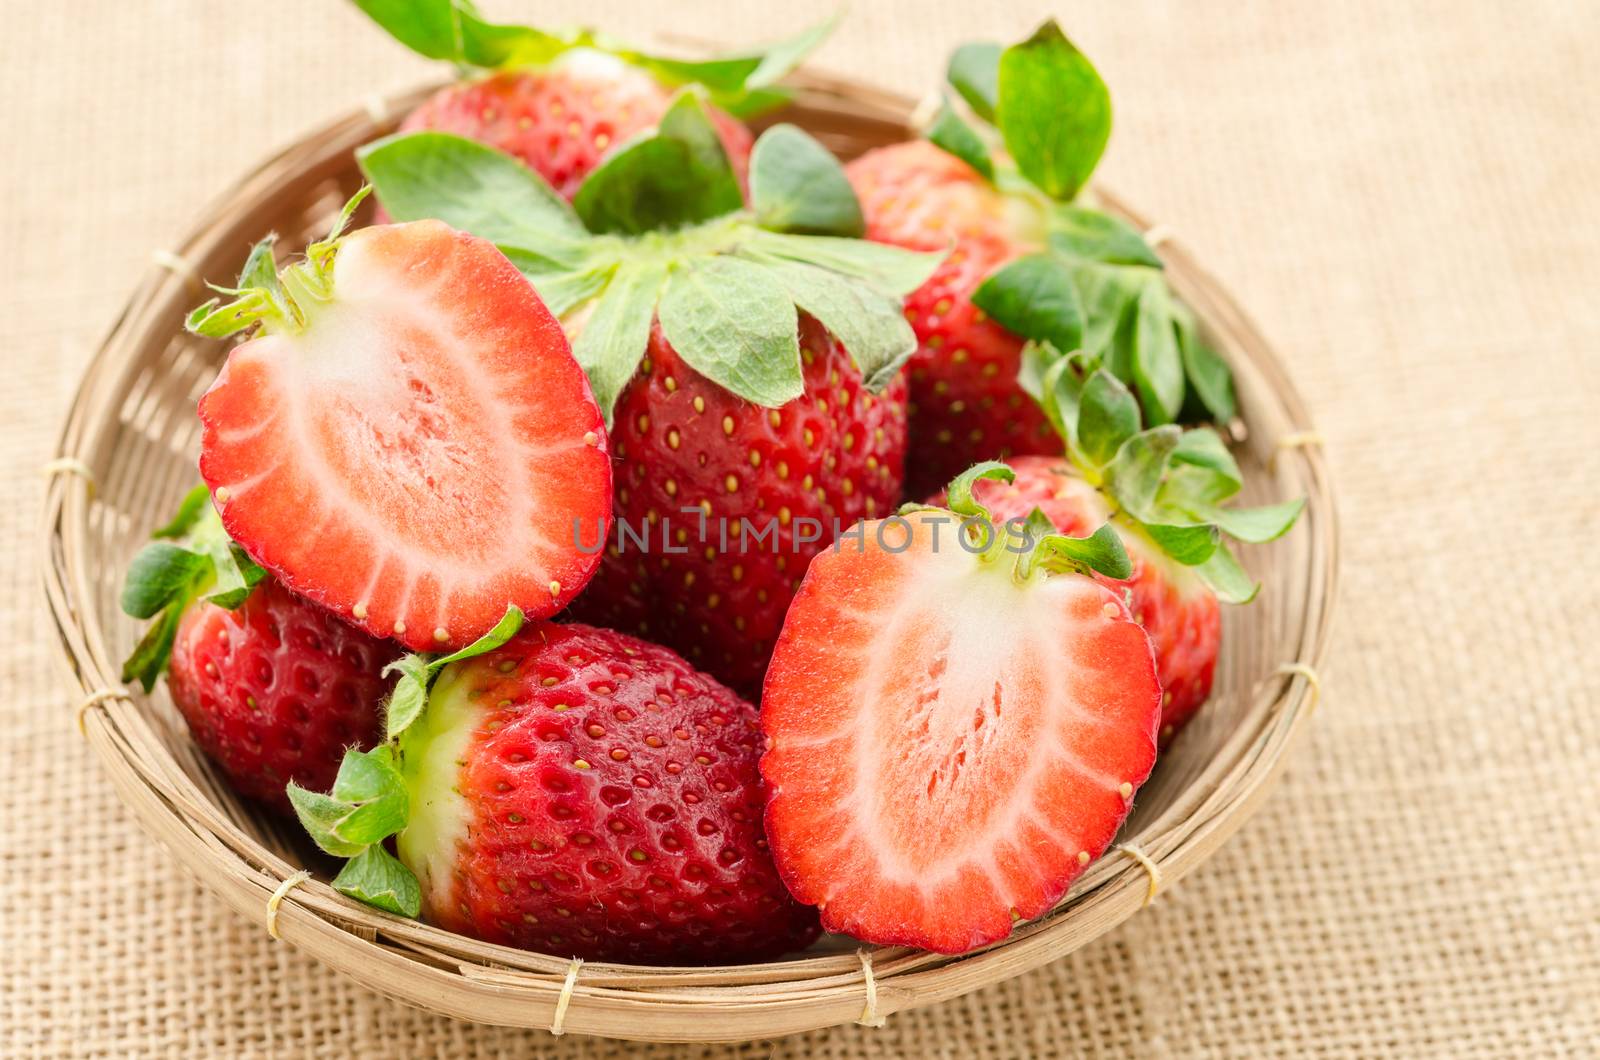 Fresh strawberries in weave basket. by Gamjai